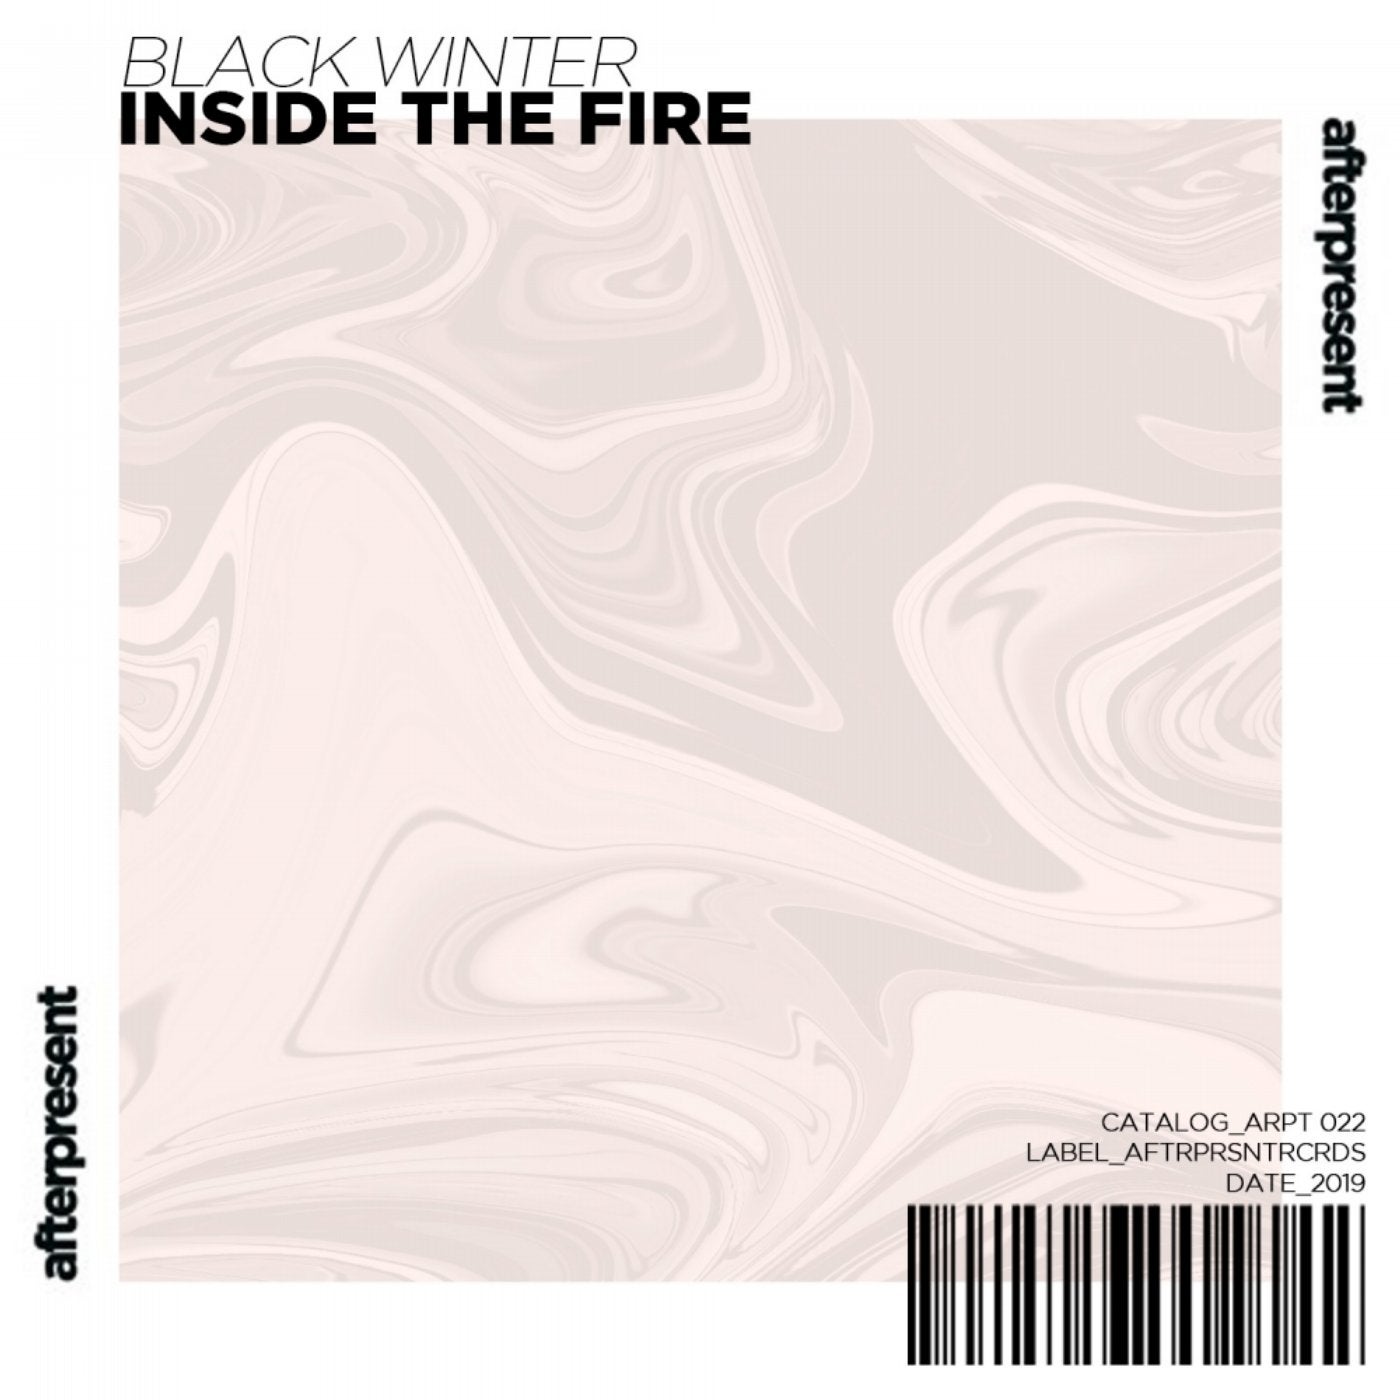 Inside the fire